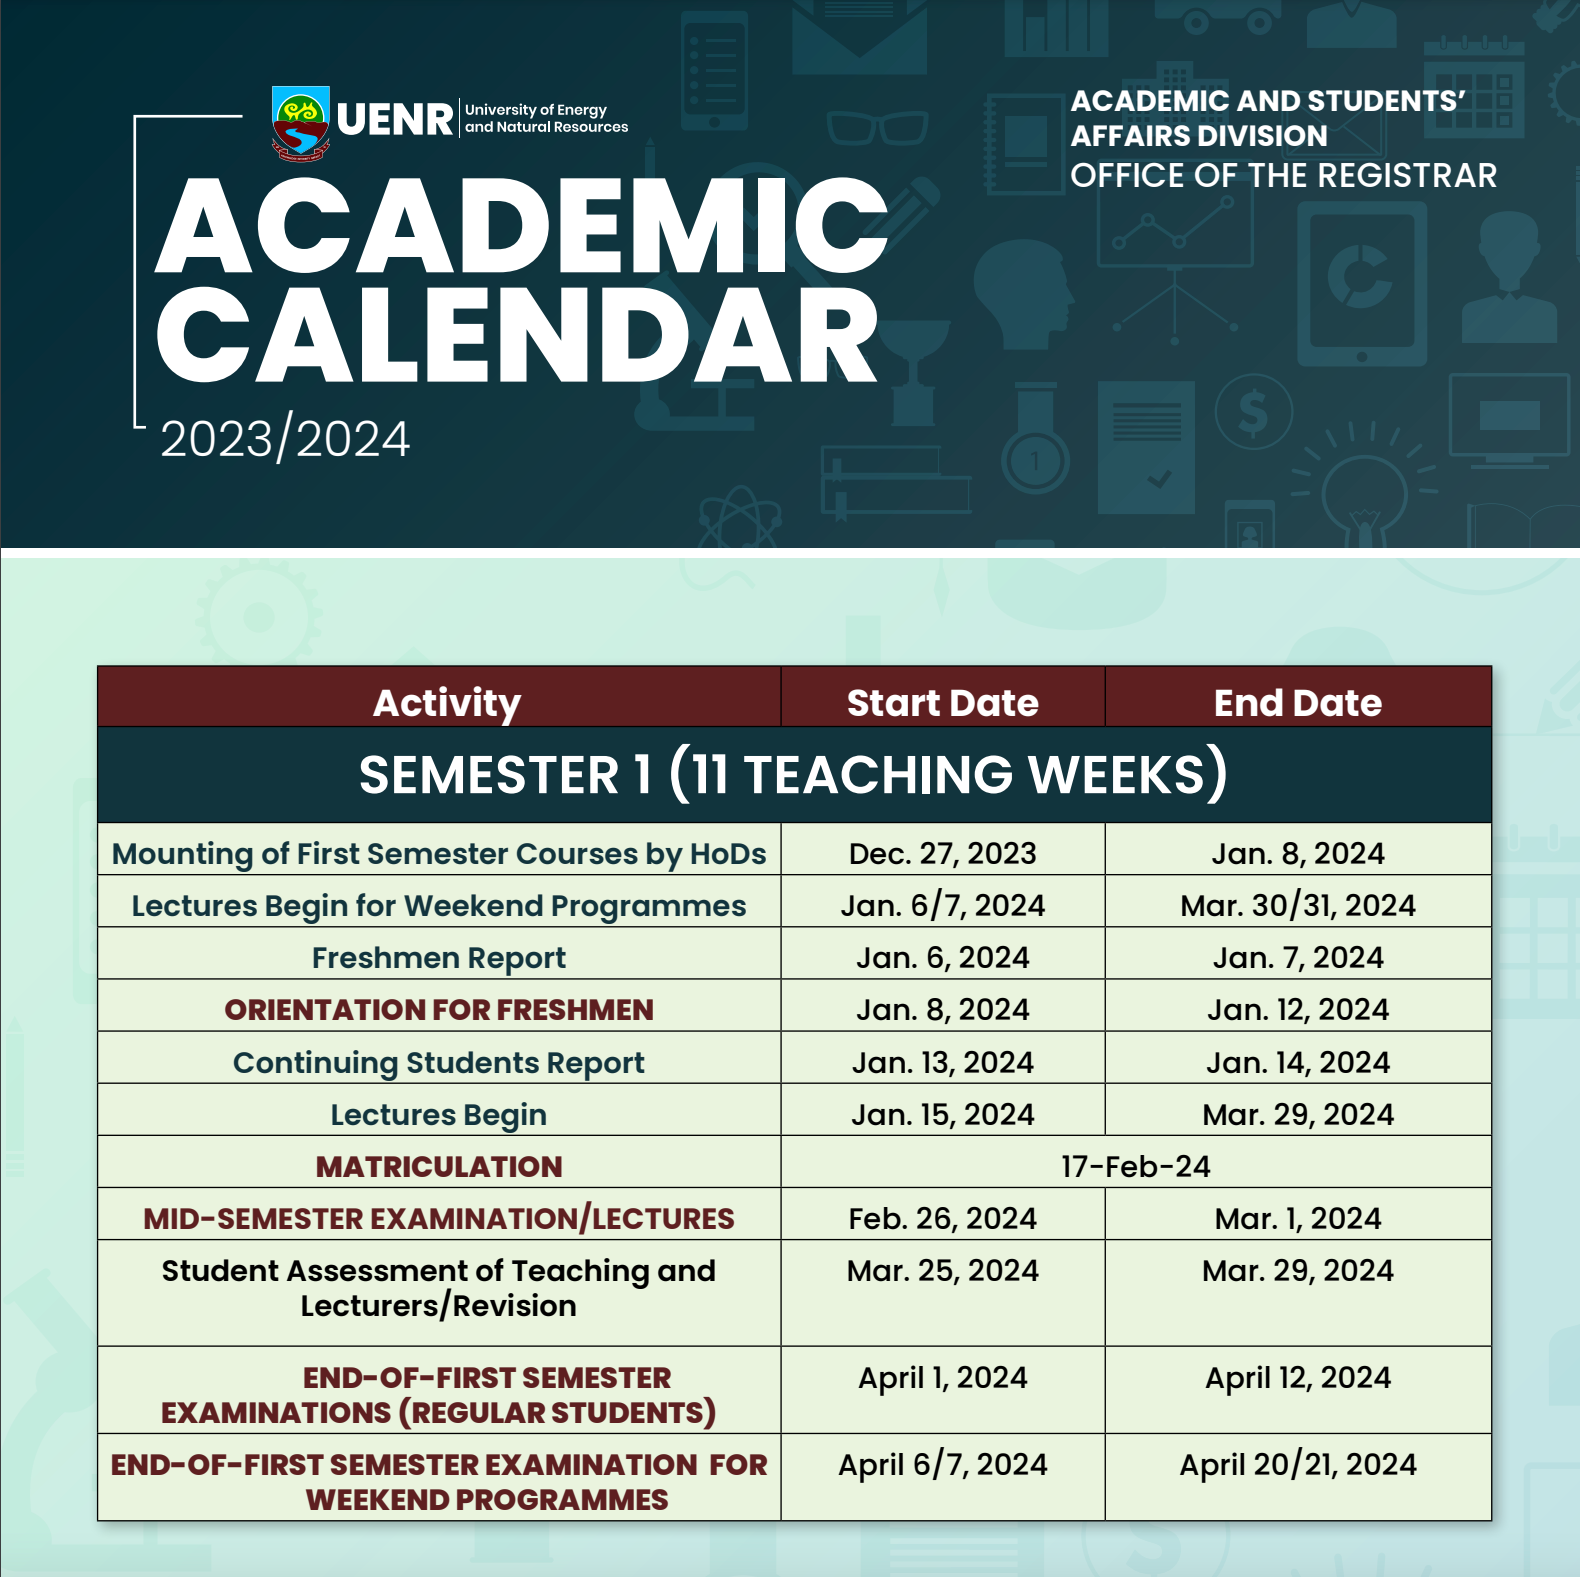 UENR Academic Calendar For 2023/2024 Academic Year